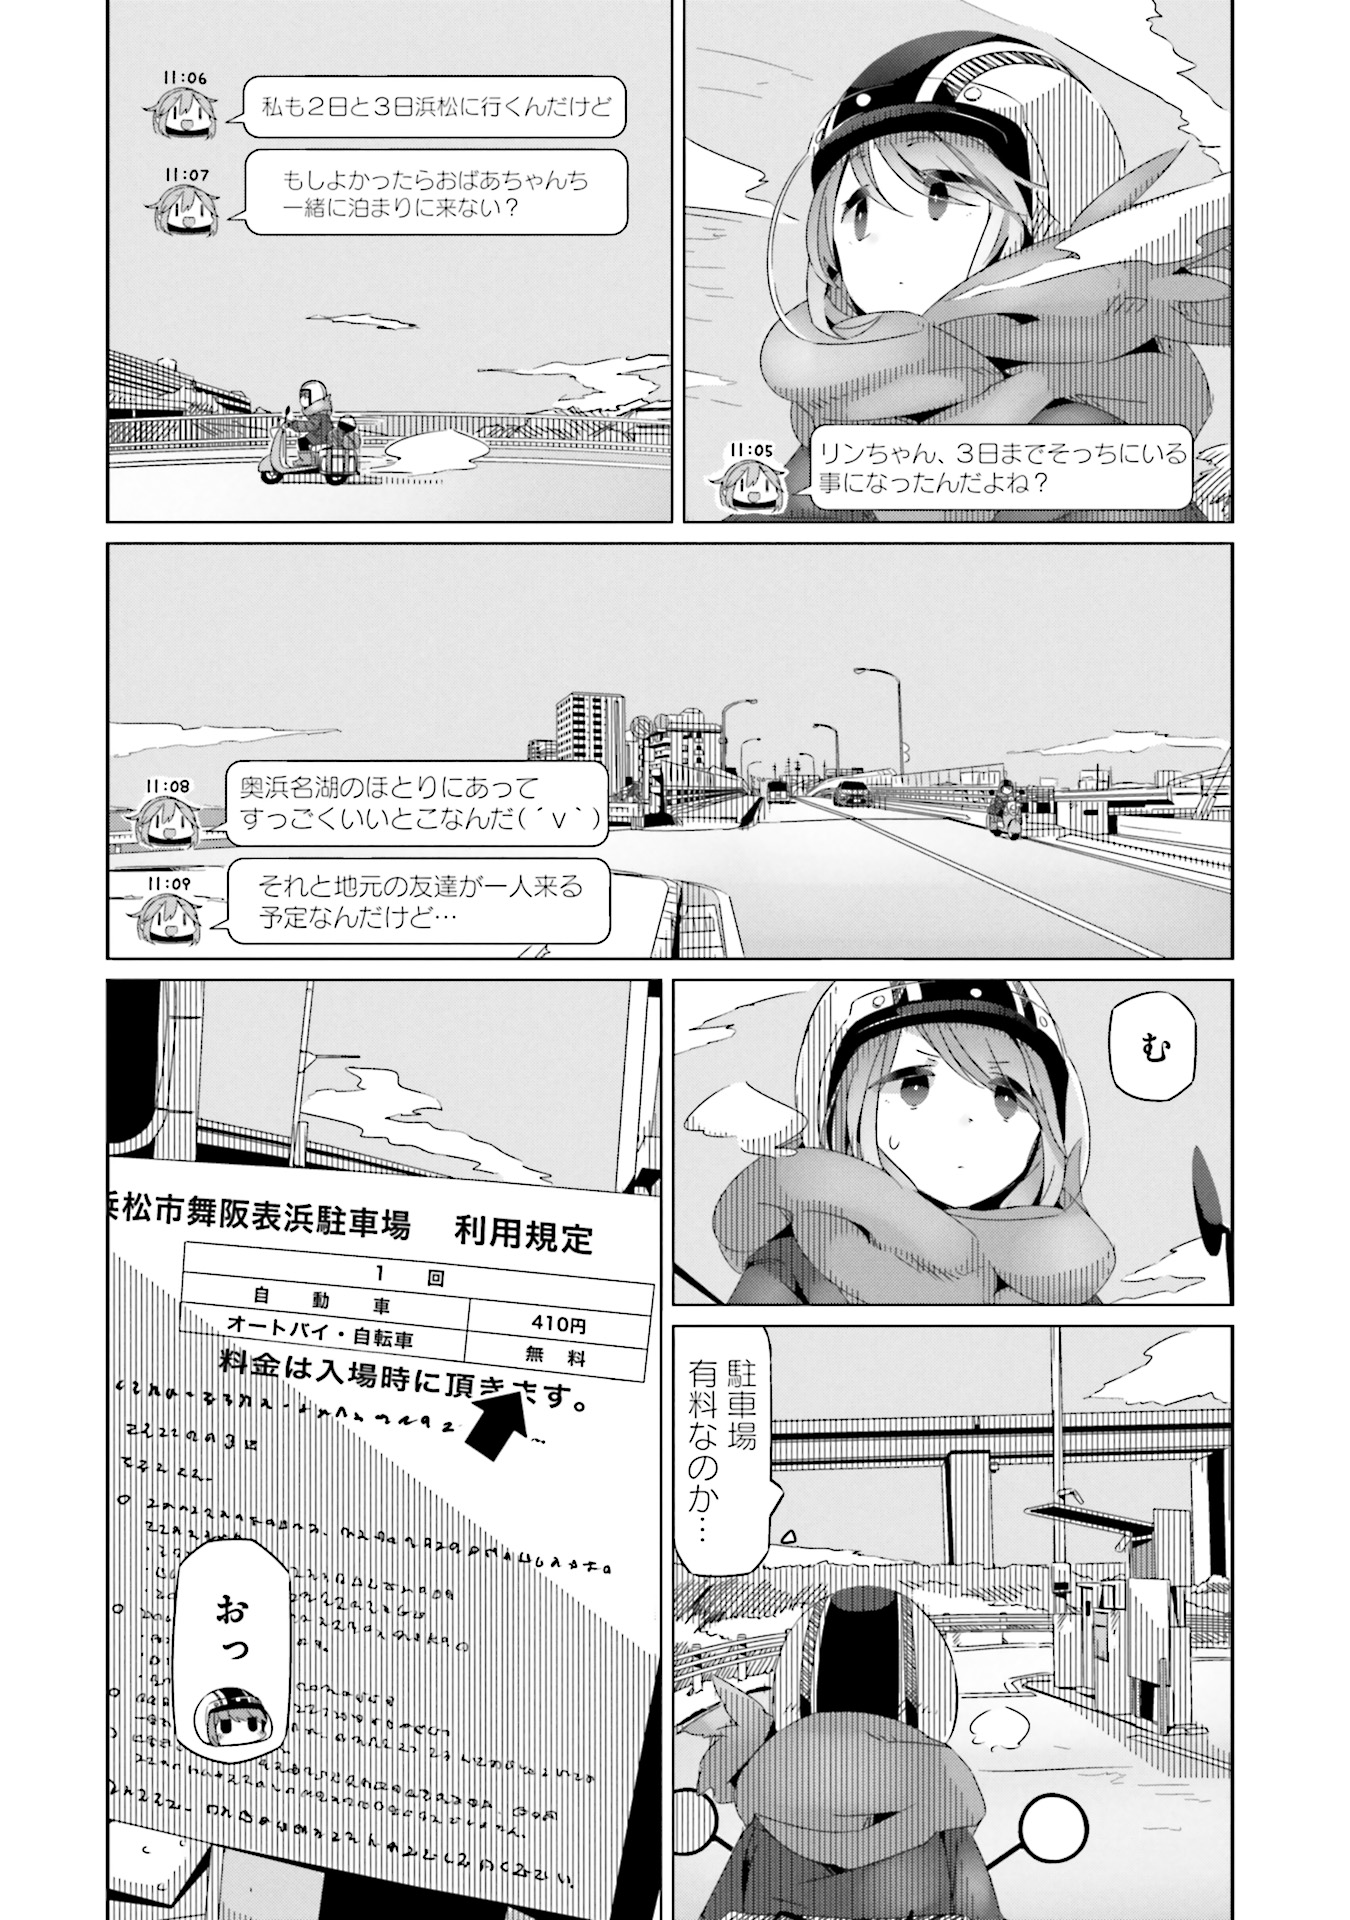 Yuru Camp - Chapter 27 - Page 2